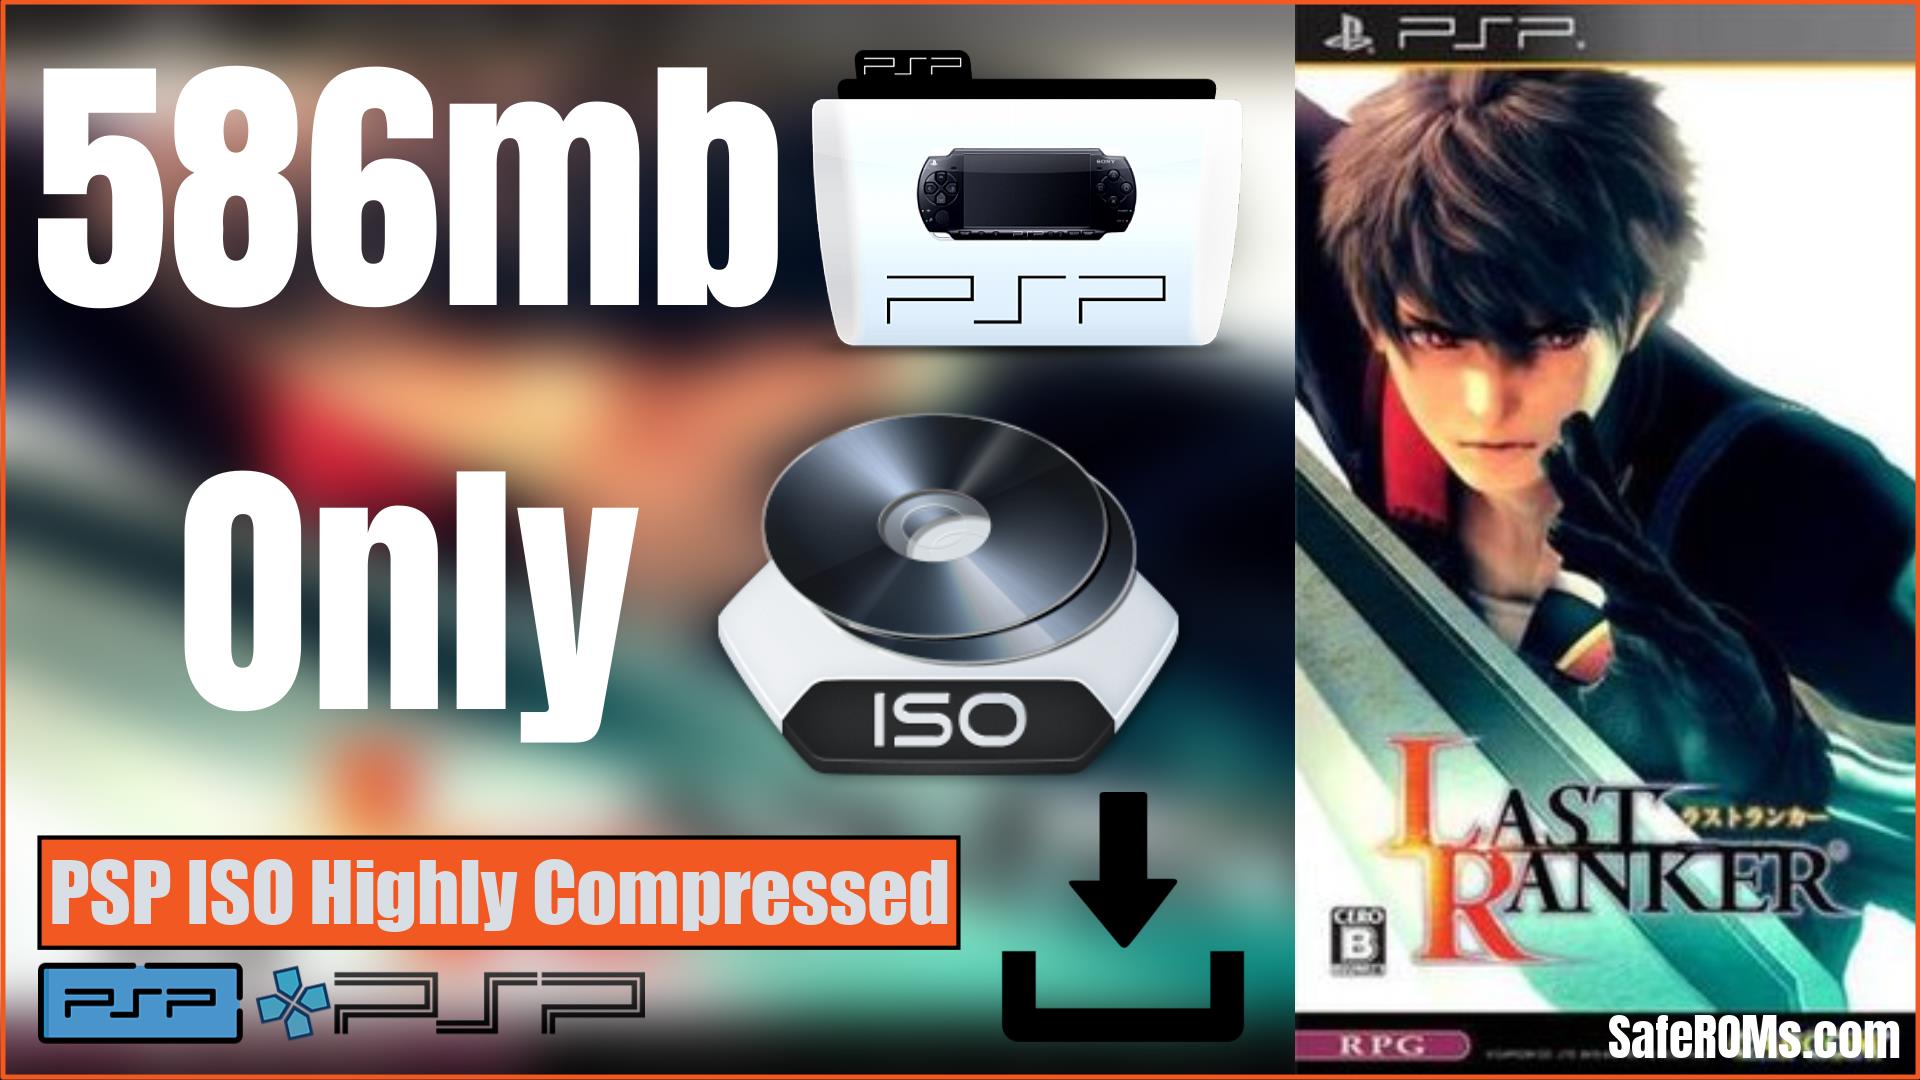 Last Ranker PSP ISO Highly Compressed Download